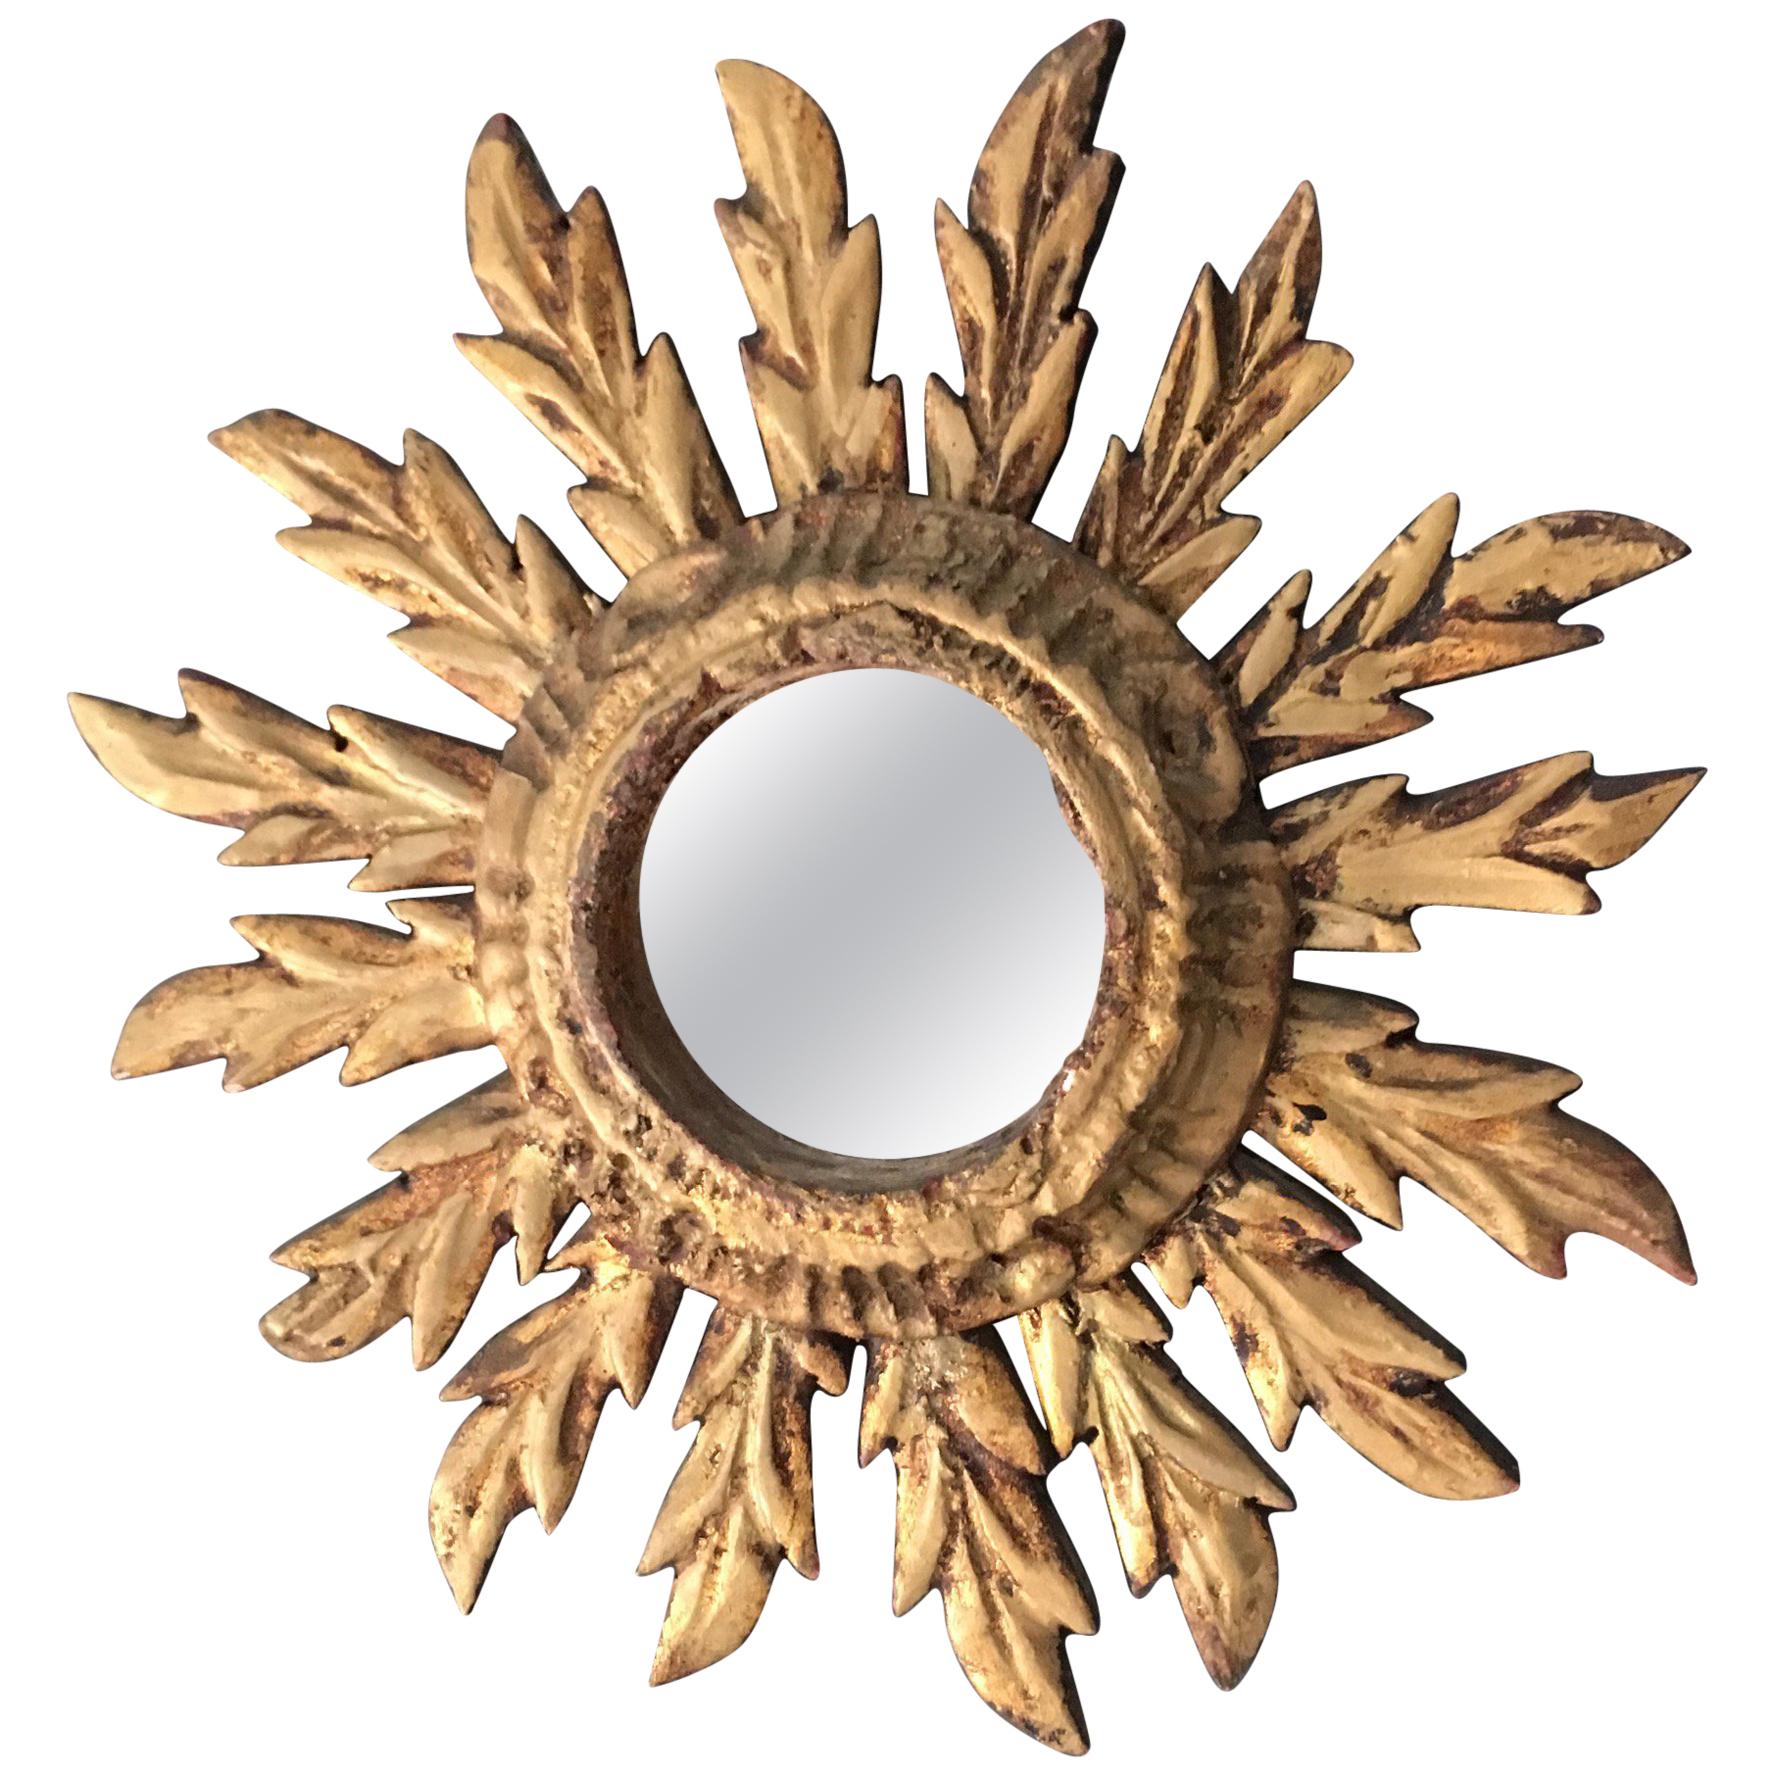 Small Spanish Handcrafted Wooden Sunburst Mirror